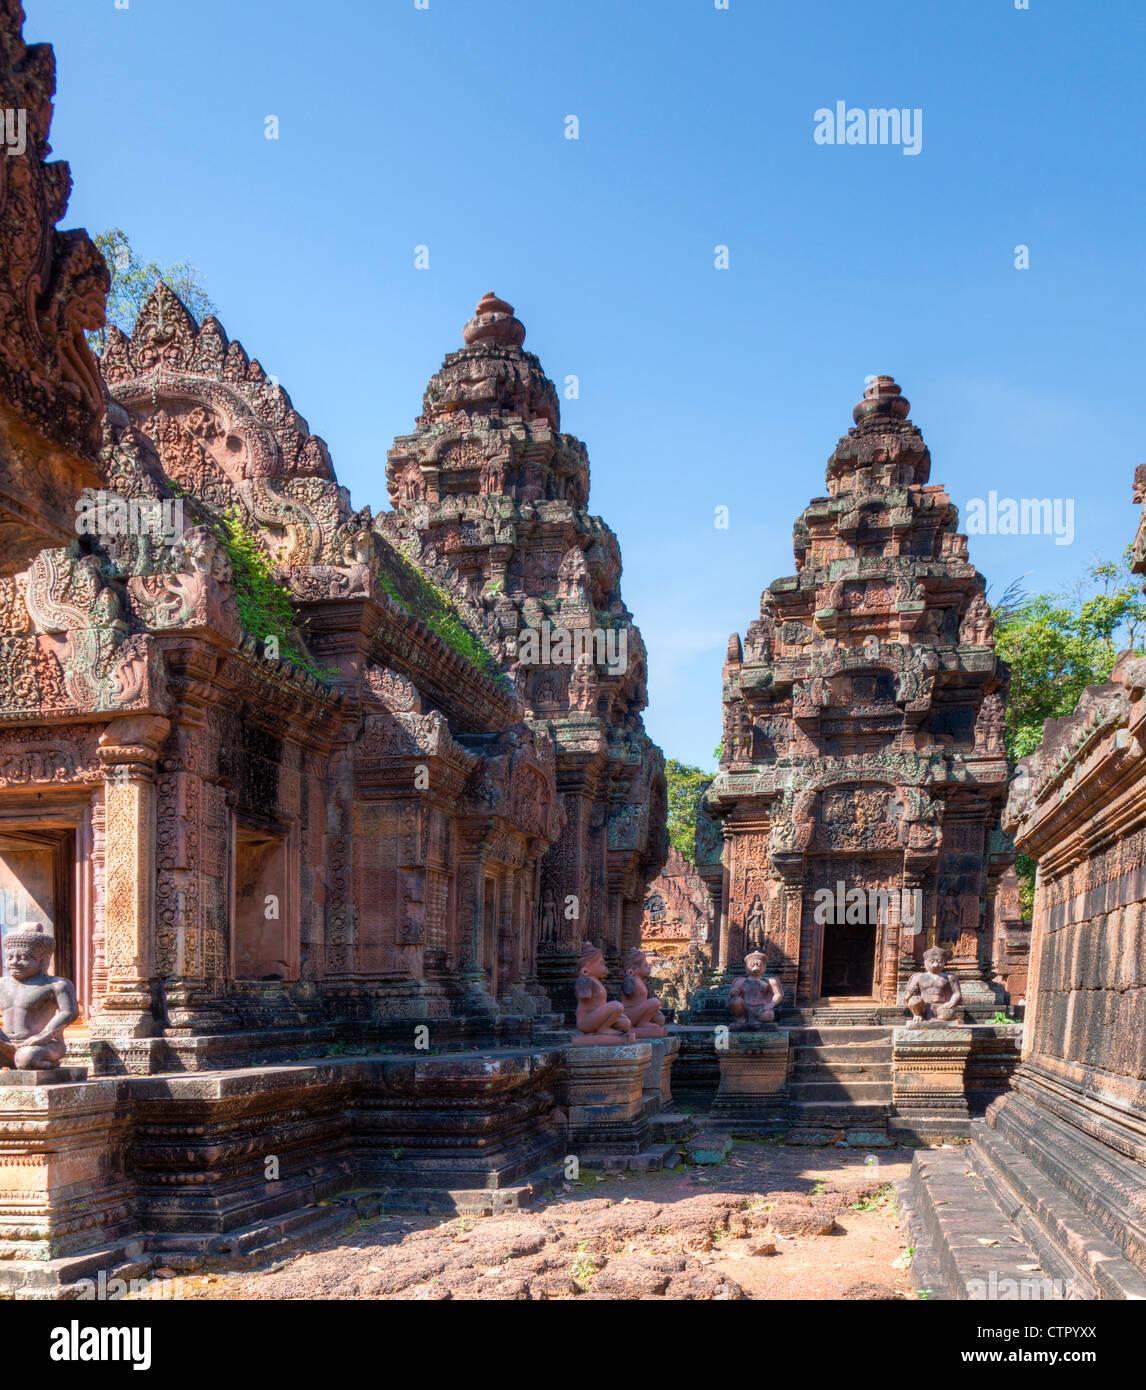 Banteay Srey temple in Cambodia Stock Photo